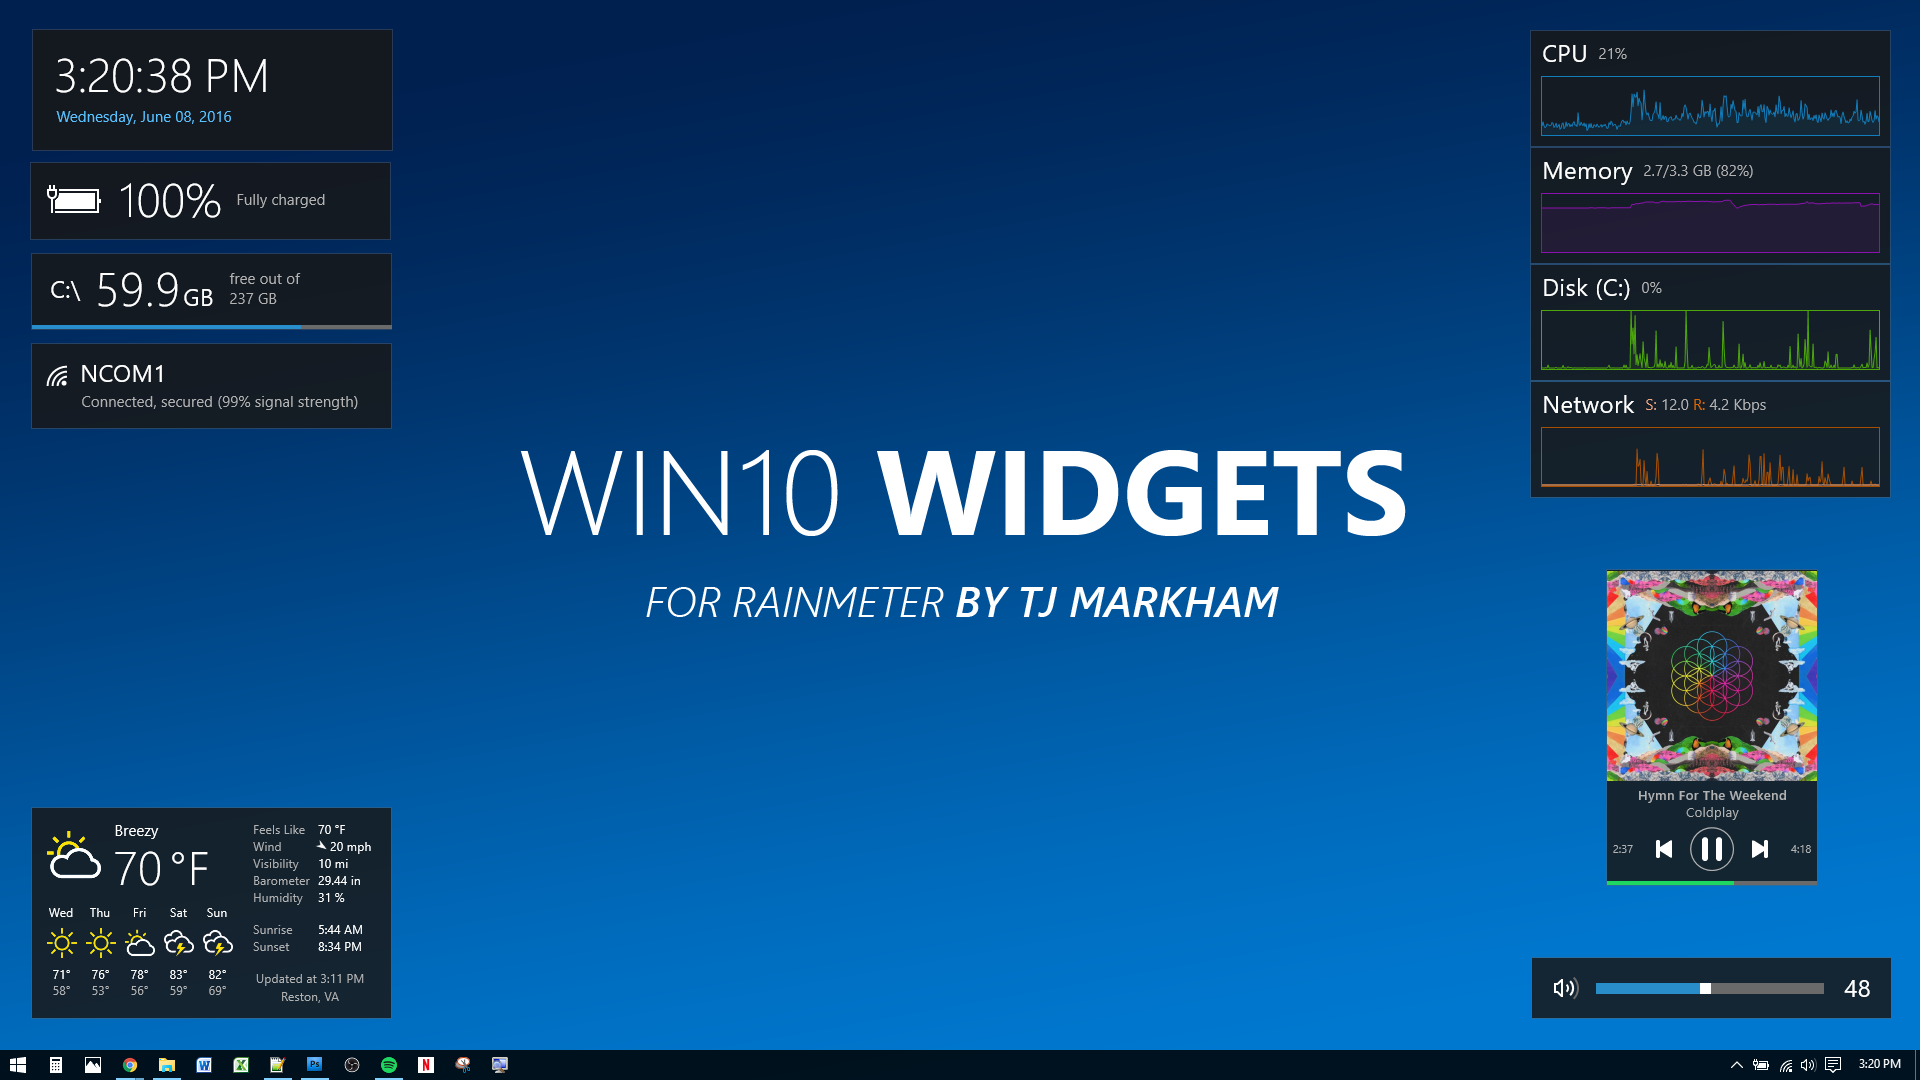 Win10 Widgets Widgets For Windows 10